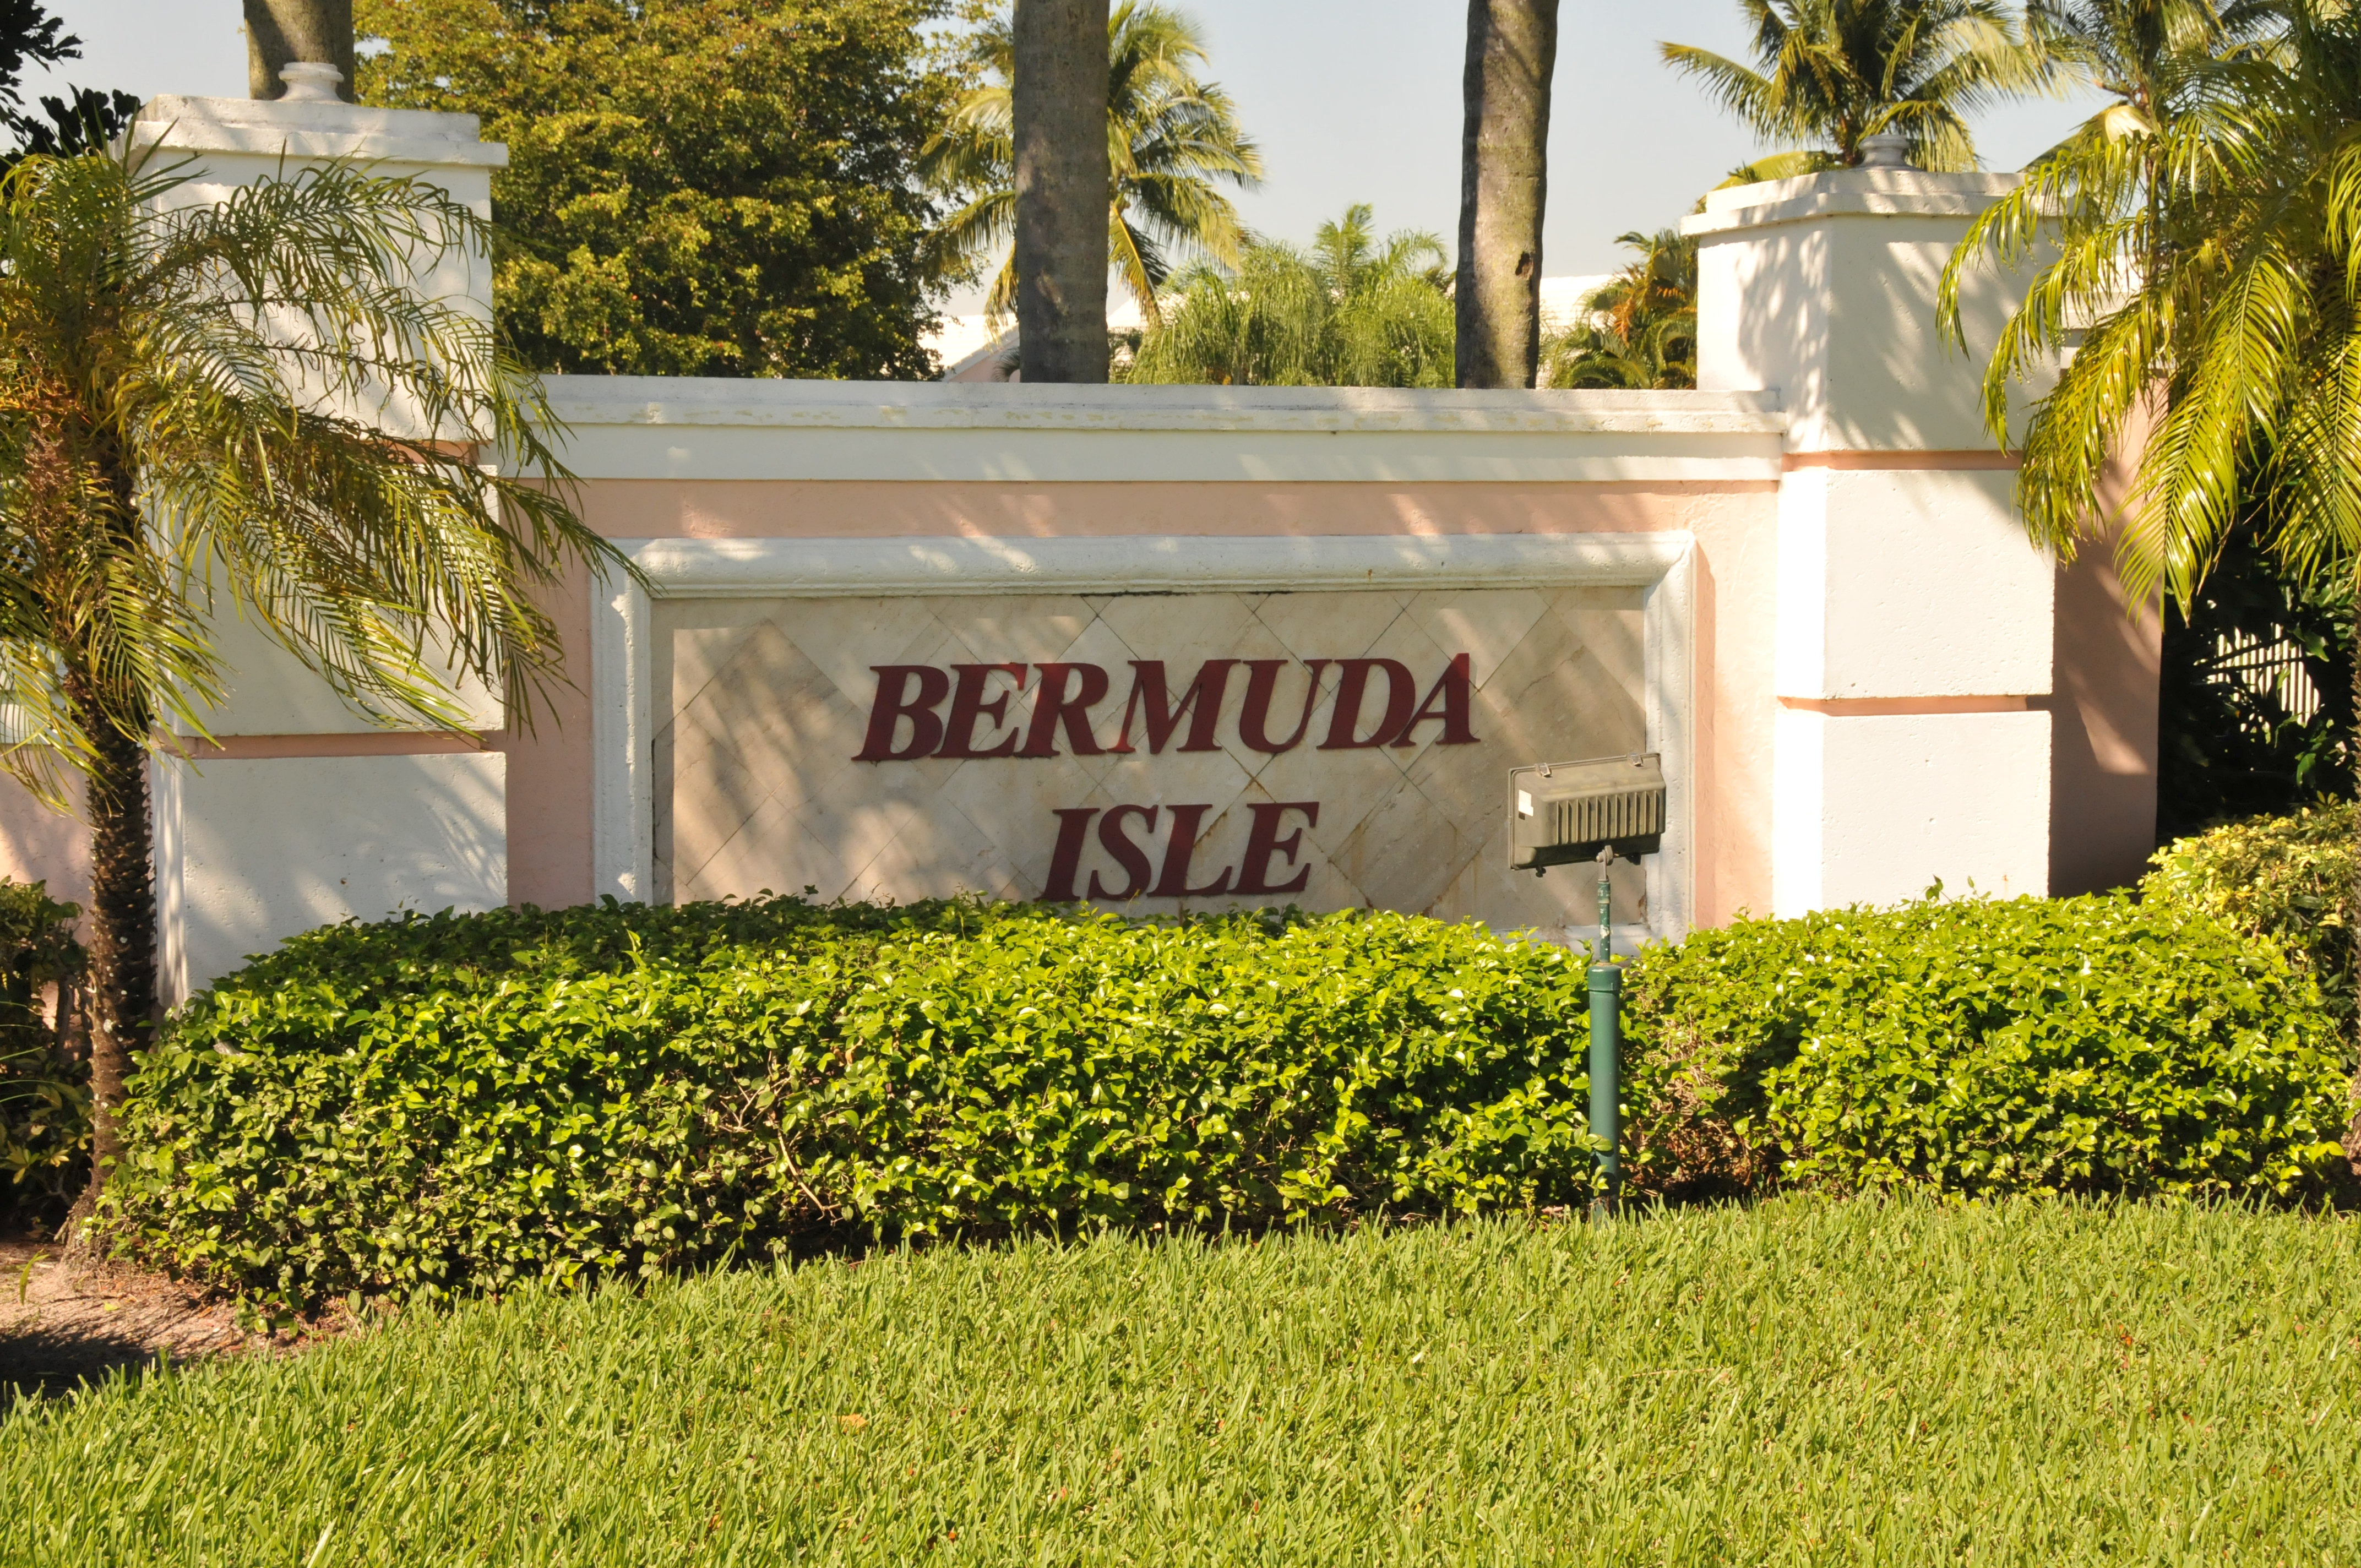 Bermuda Isle